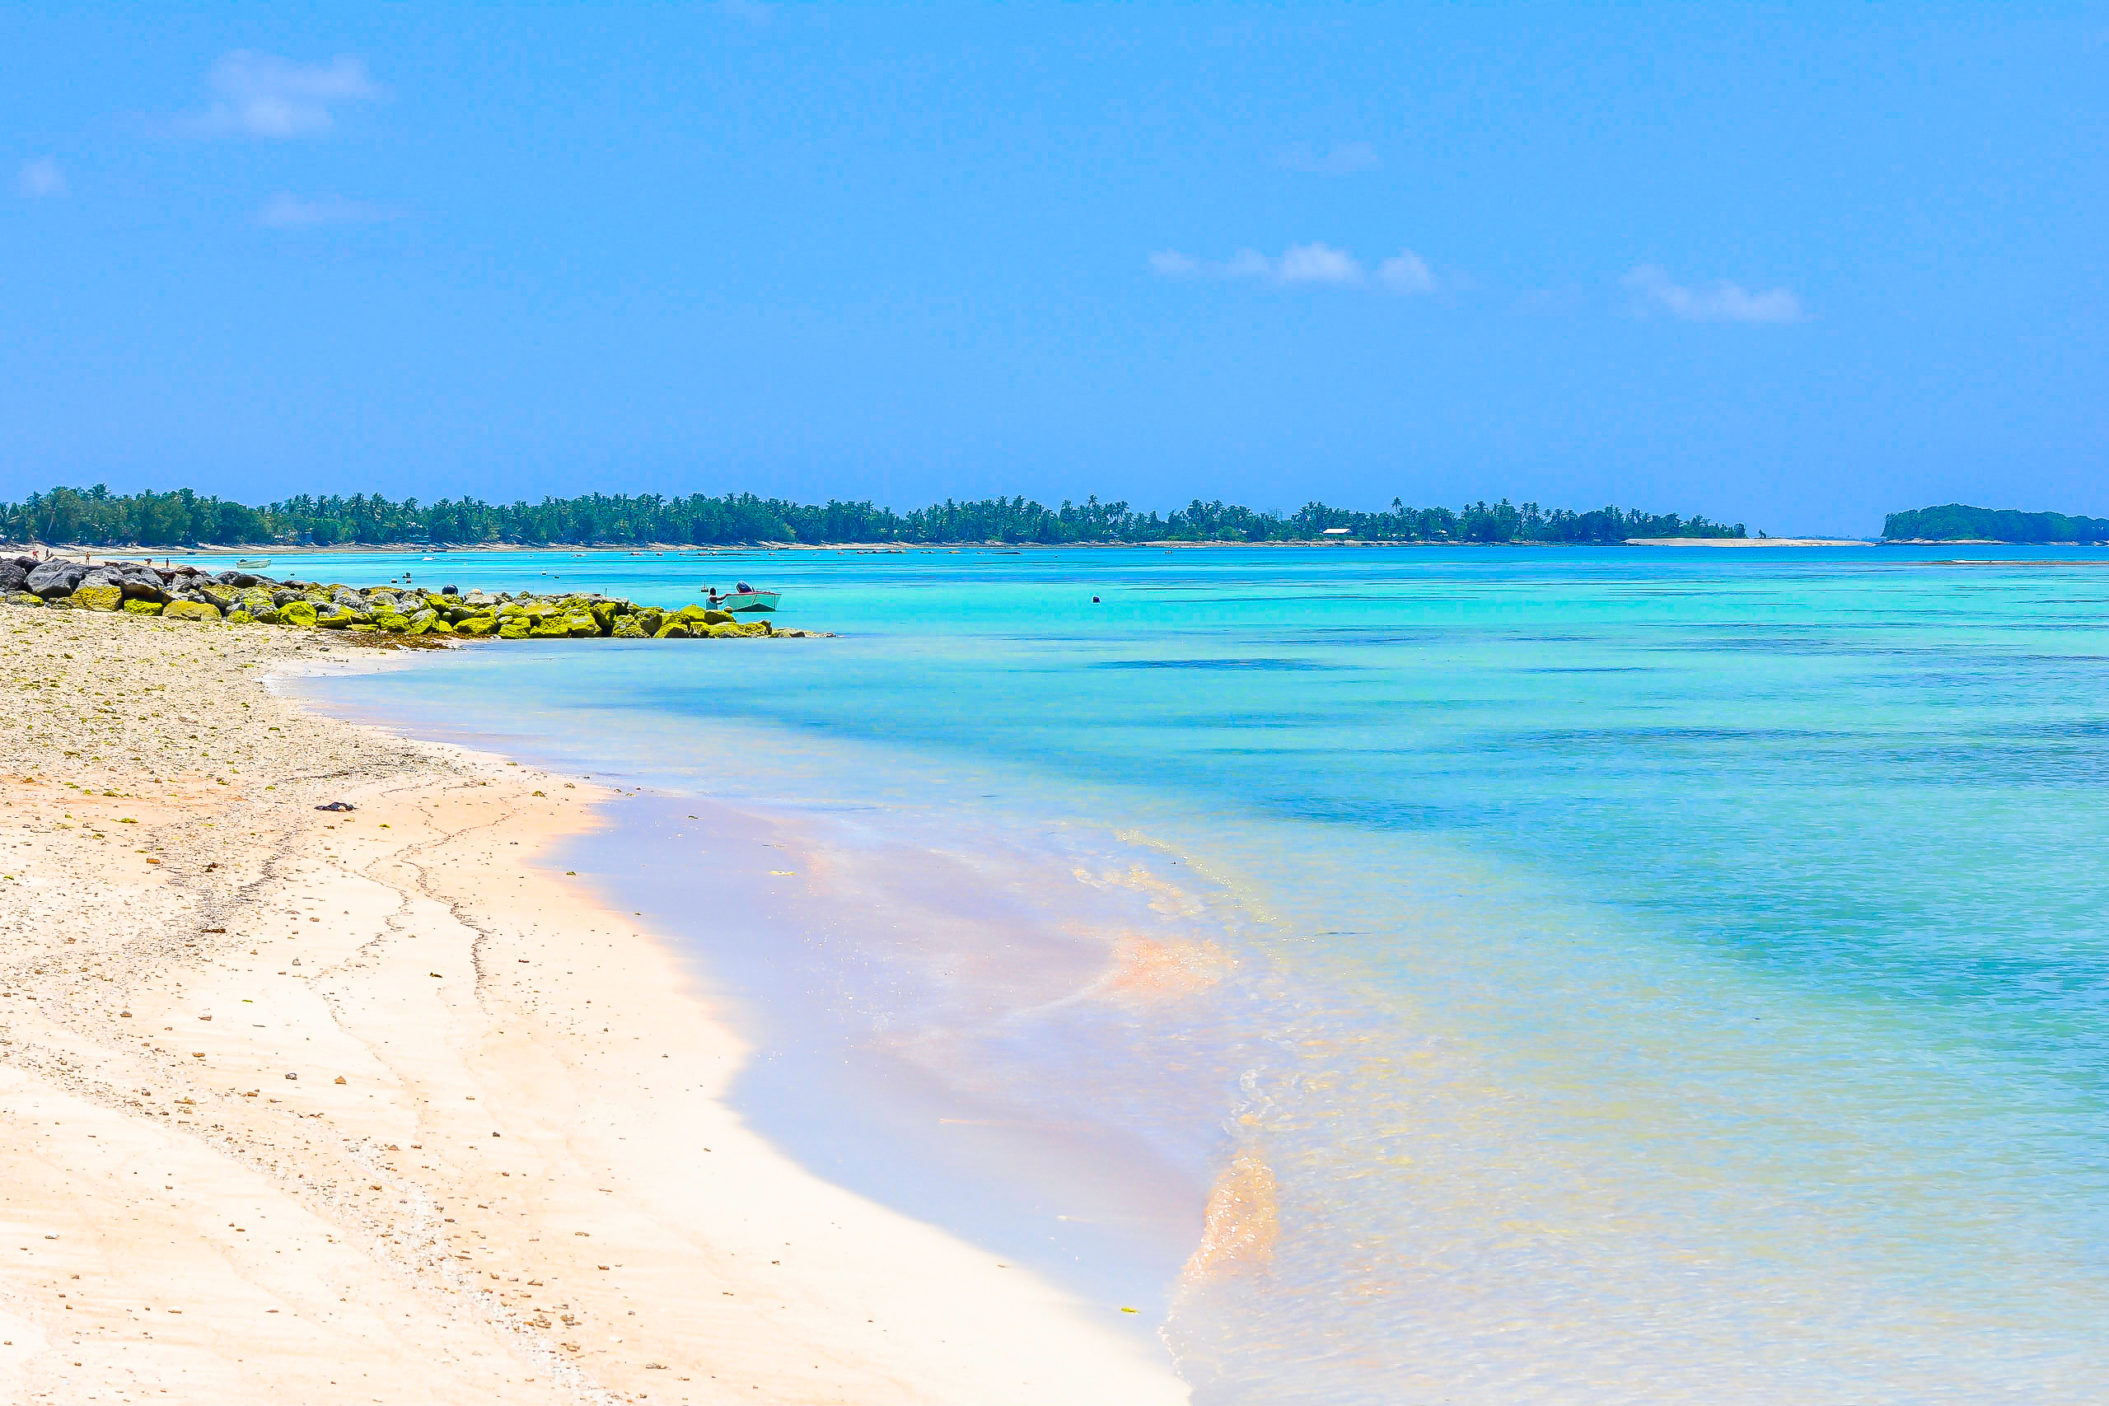 Tuvalu [Shutterstock]